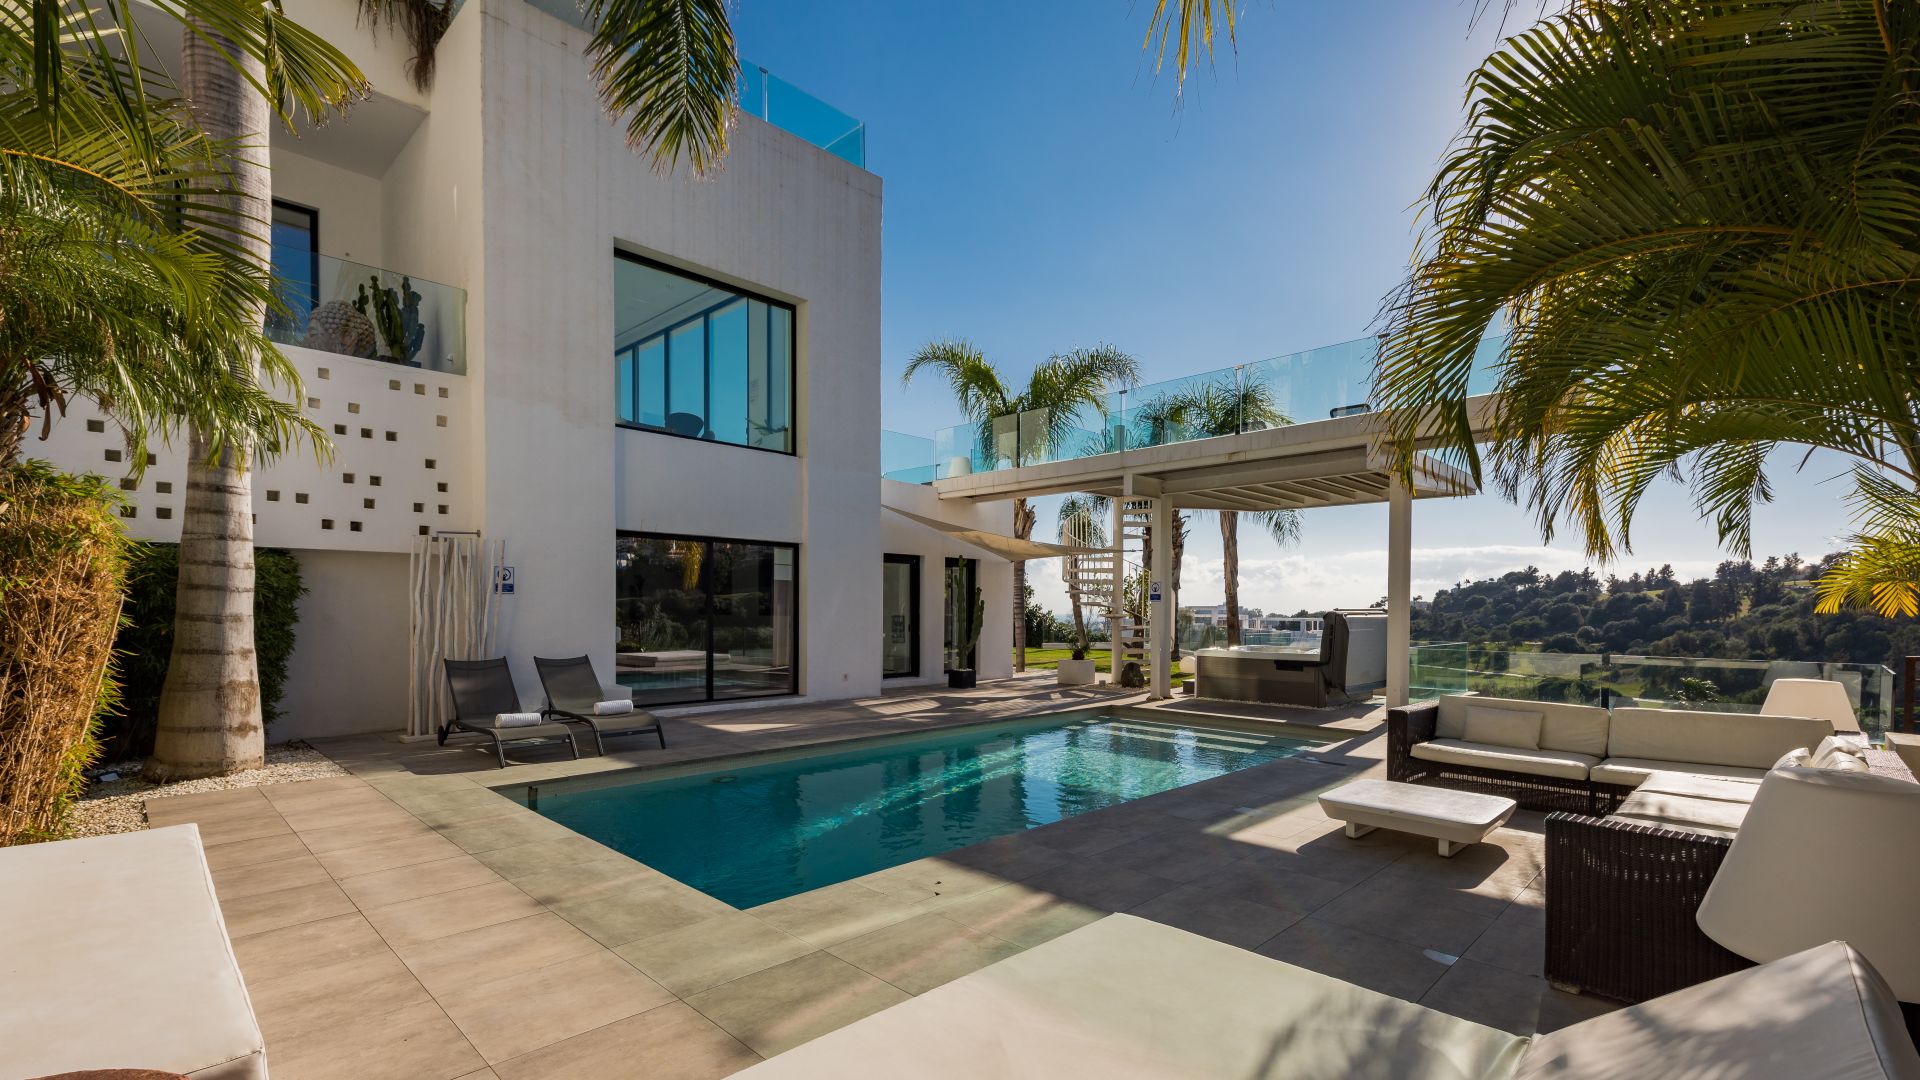 La Alqueria: Modern villa with panoramic sea views | Engel & Völkers Marbella